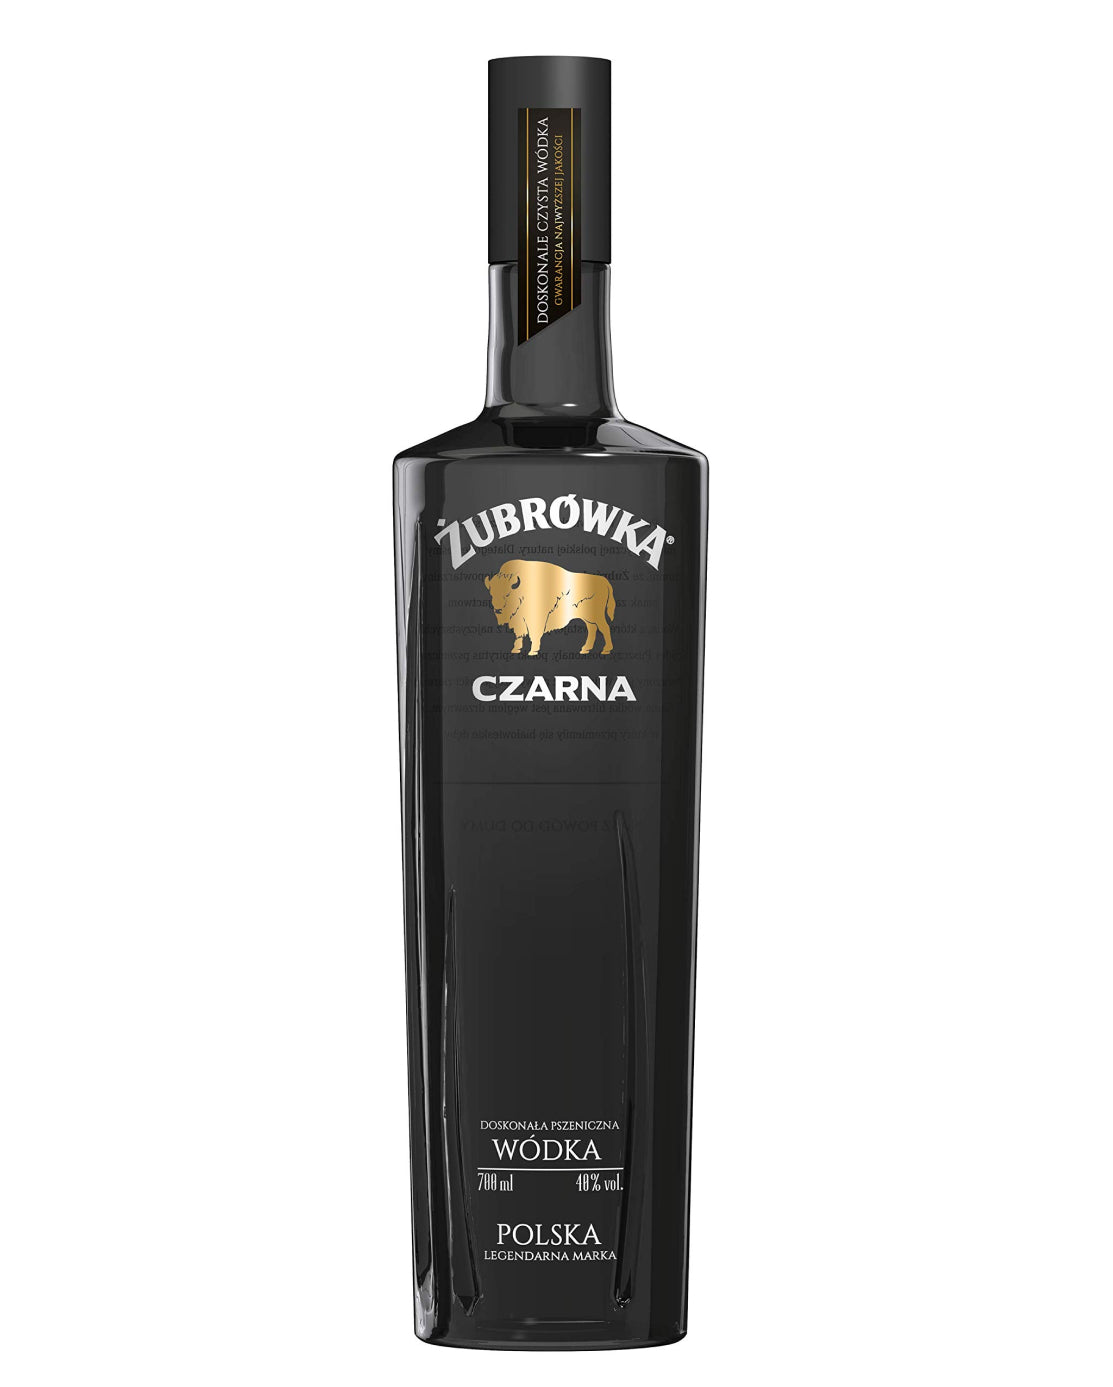 Zubrowka Czarna Vodka, 70 cl